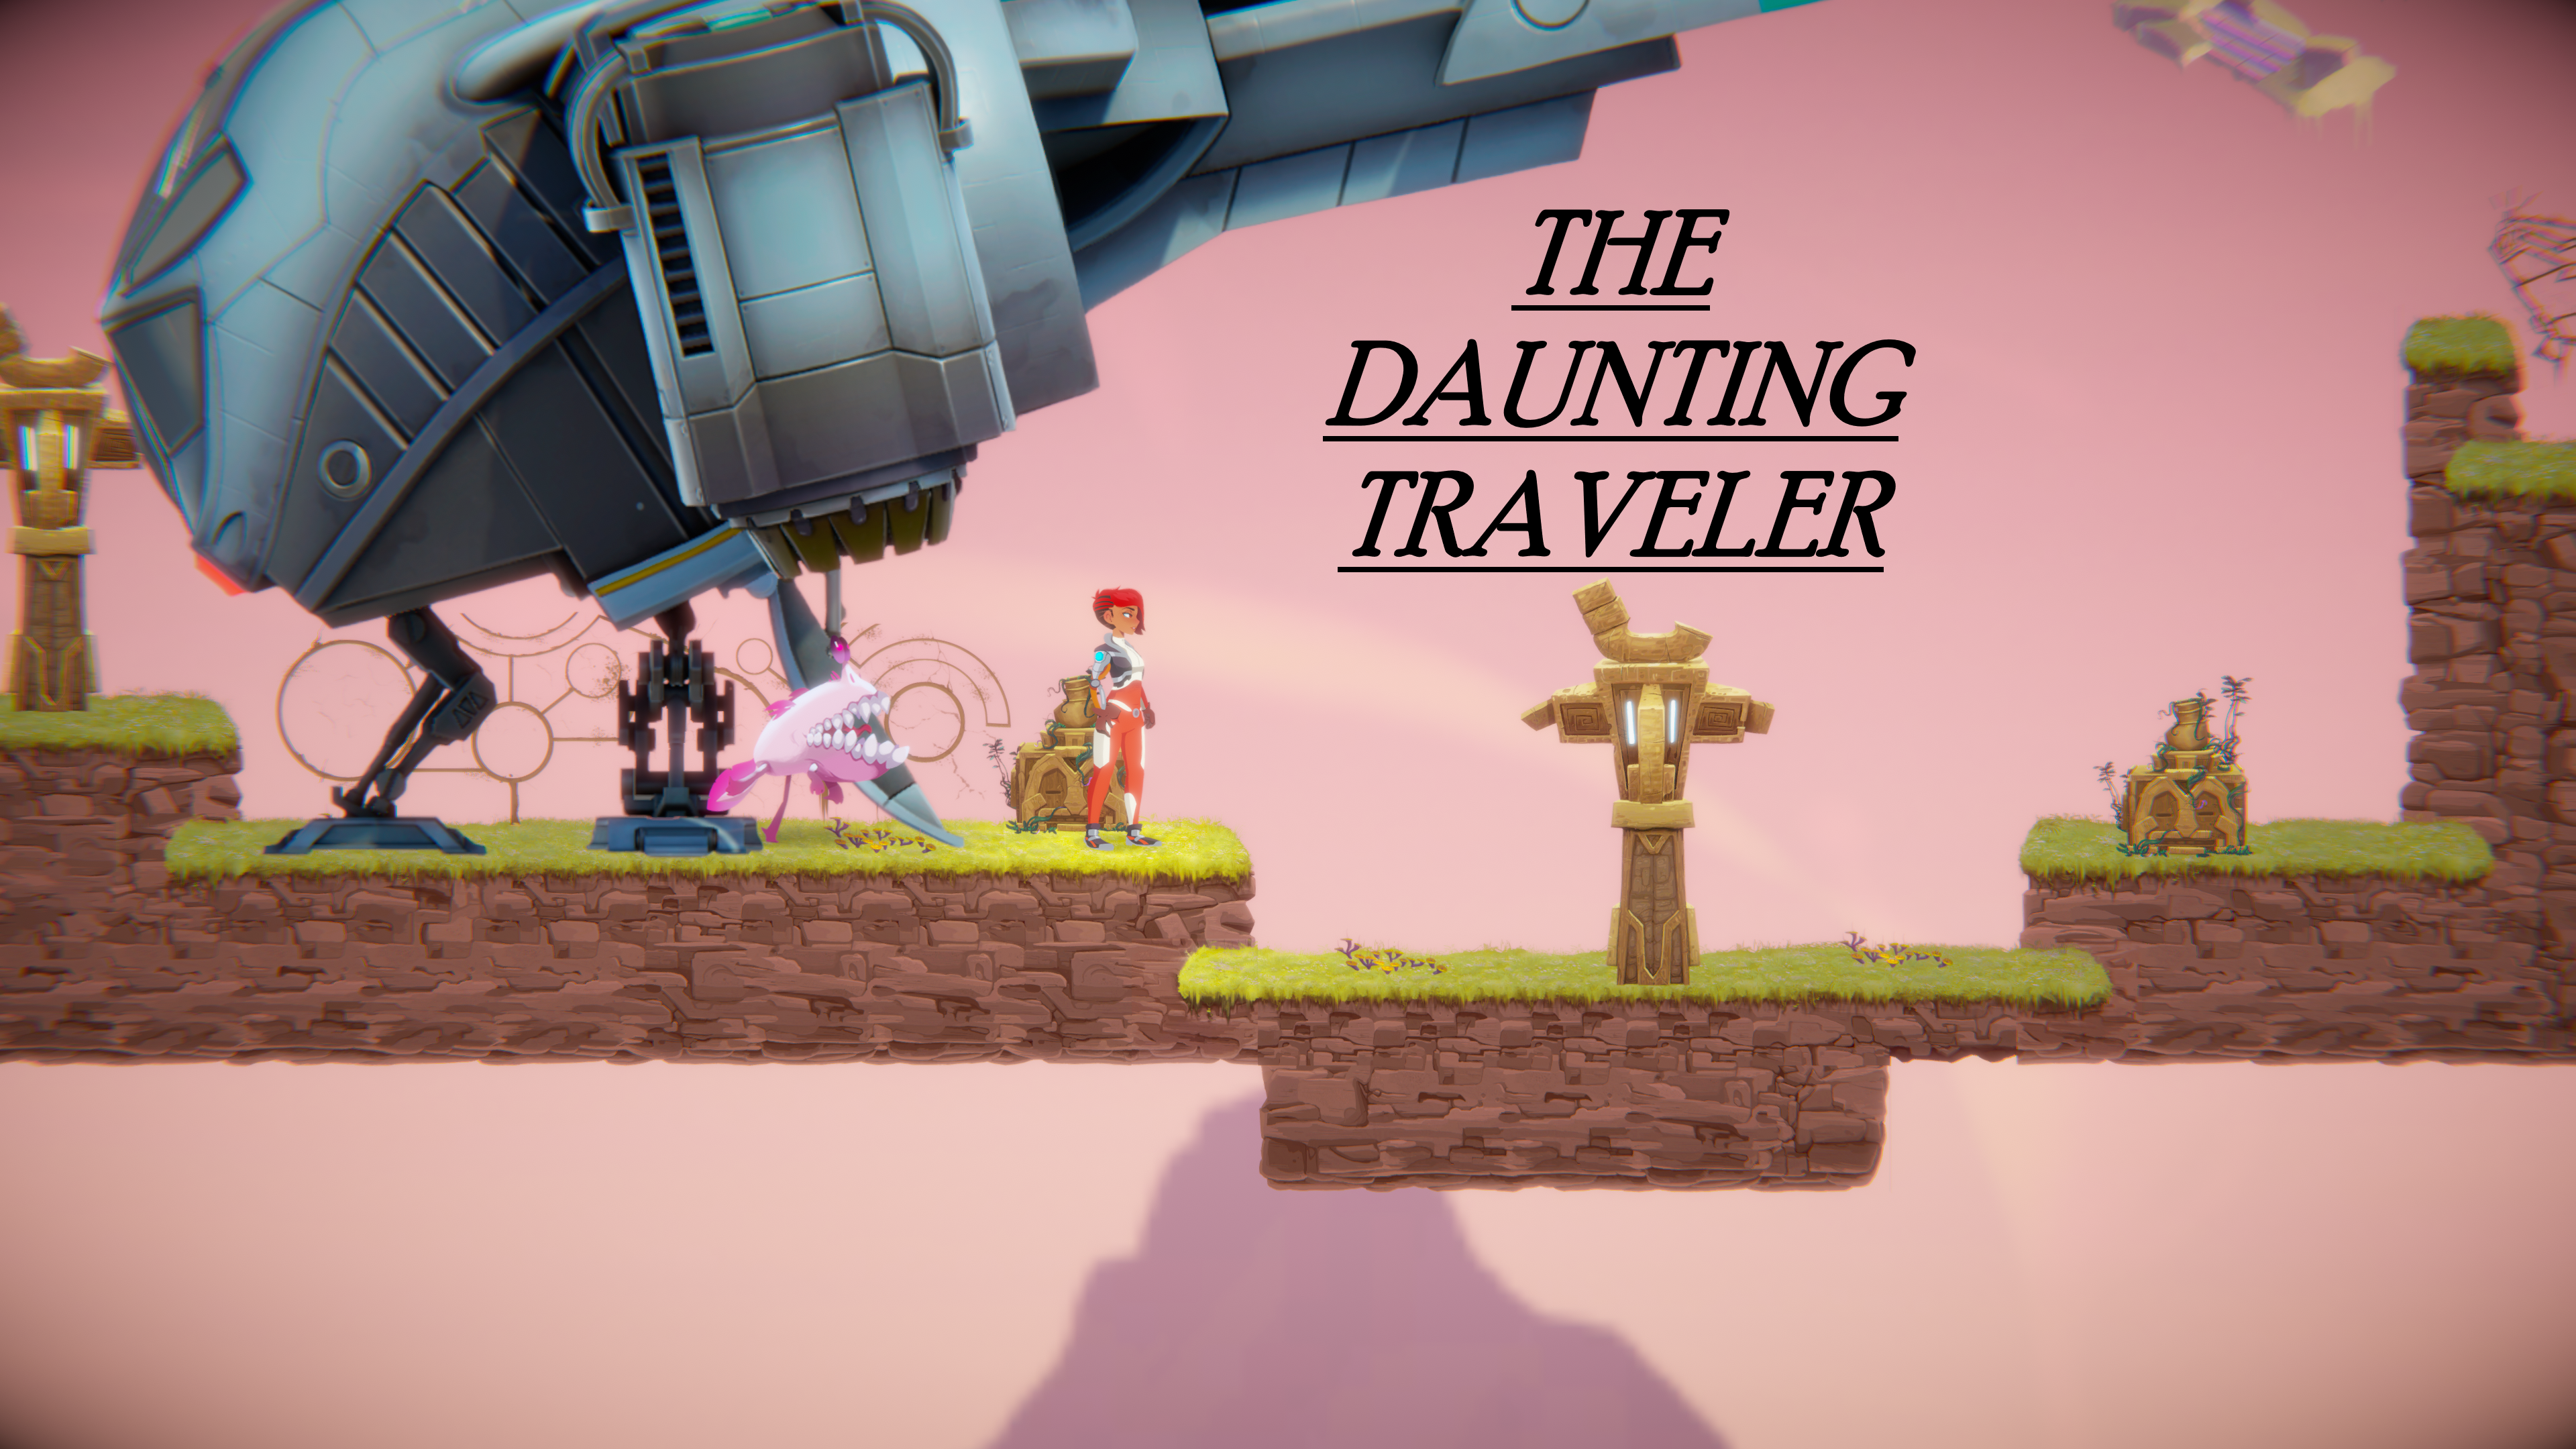 The Daunting Traveler